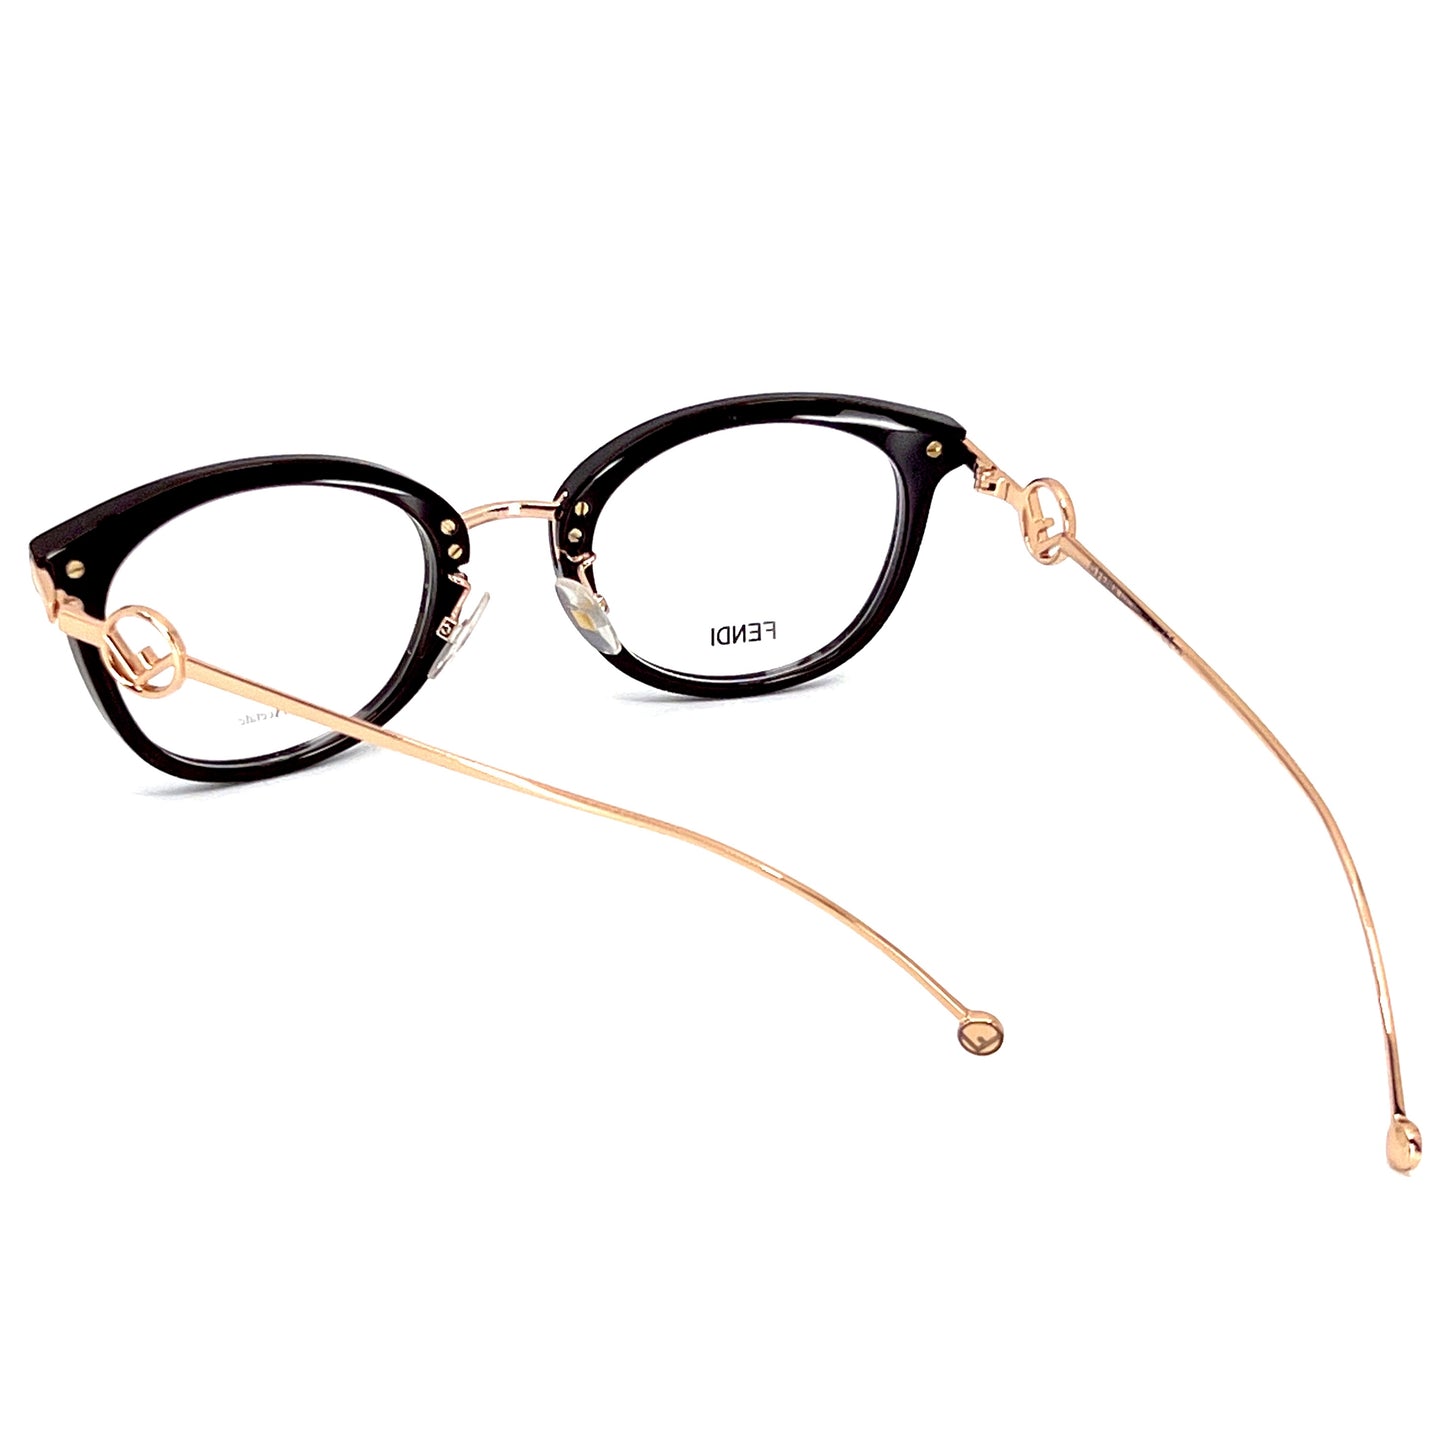 FENDI Eyeglasses FF0426/F LHF